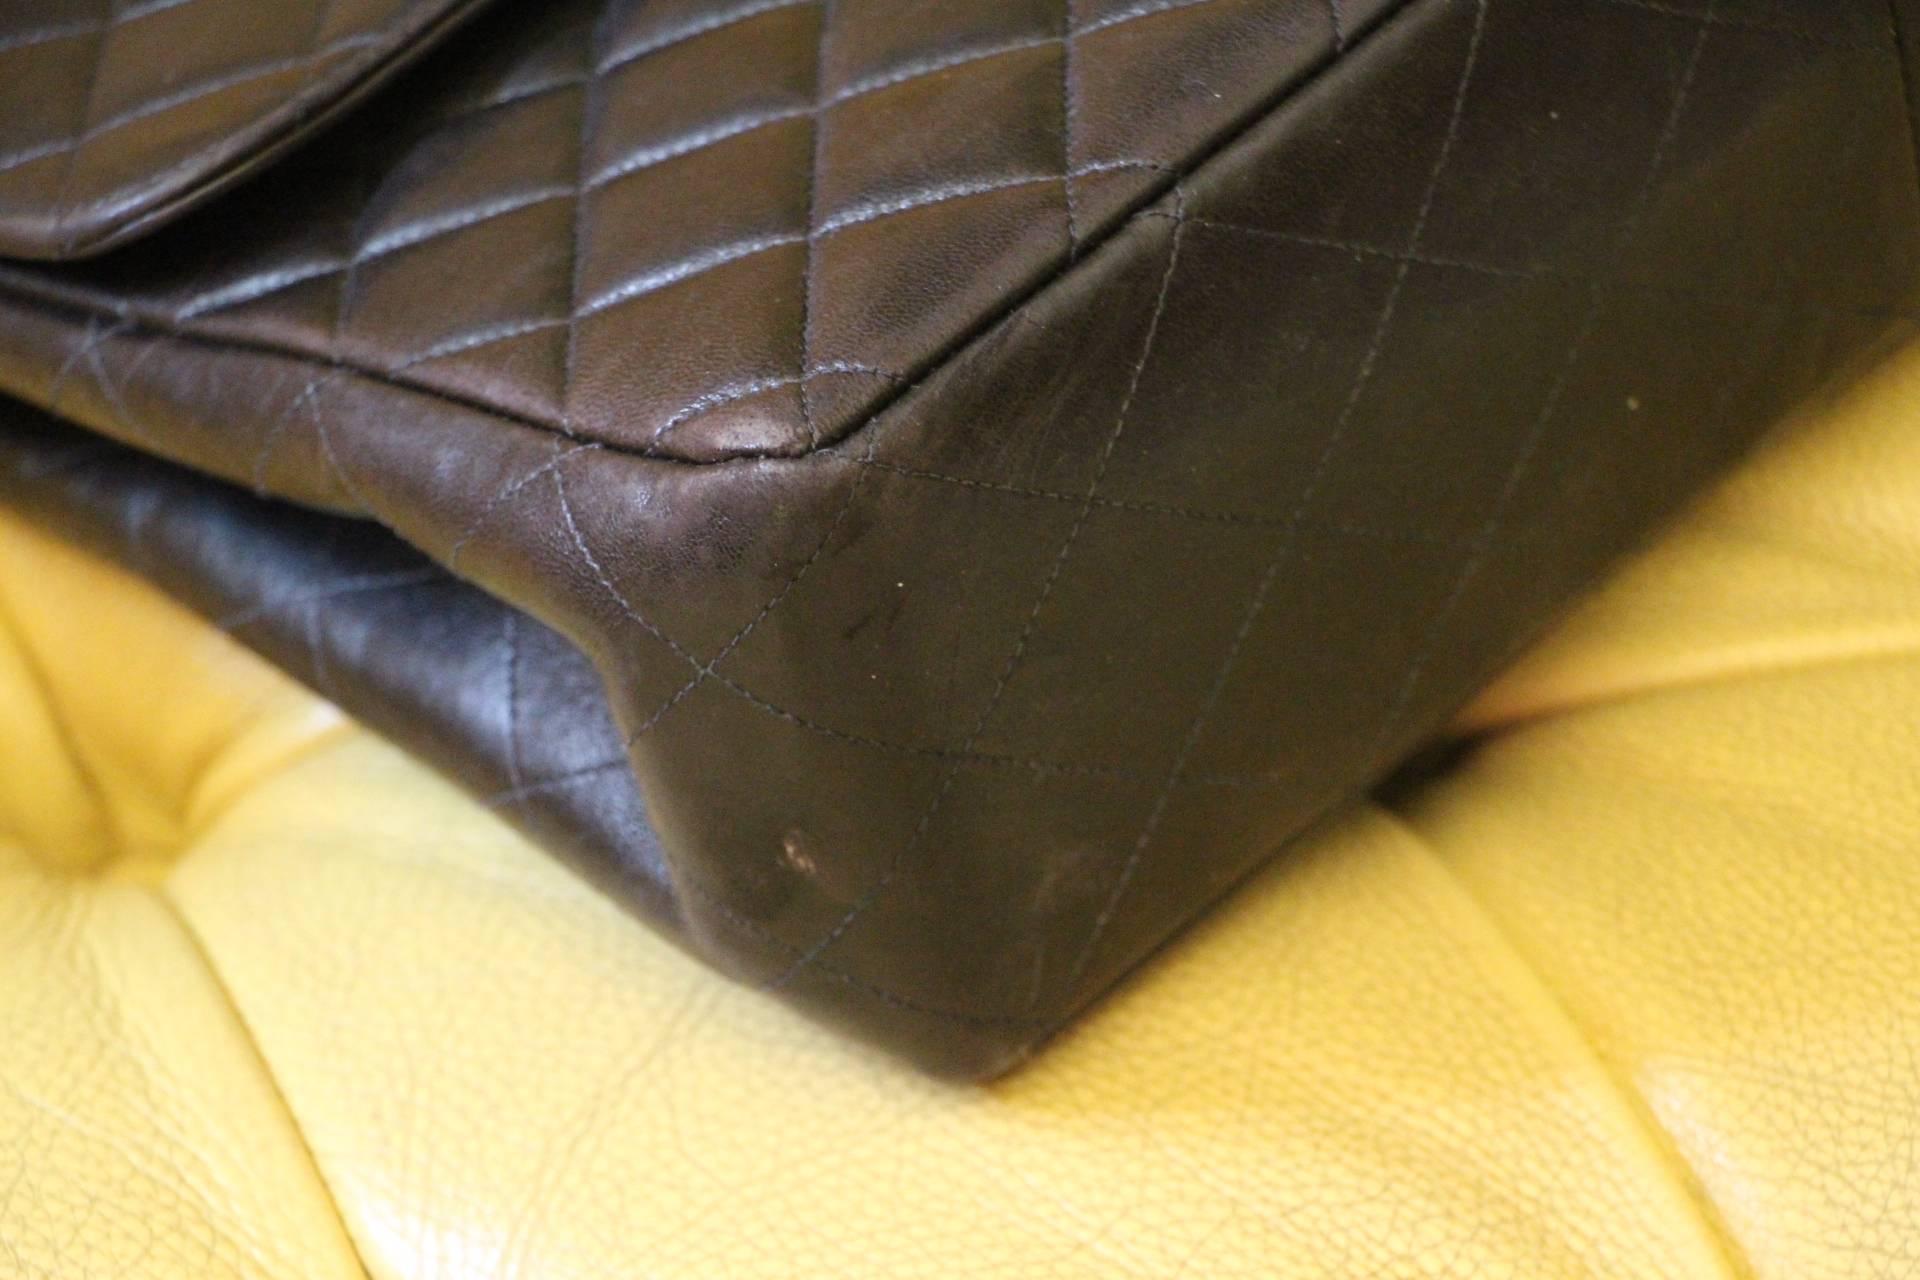 Chanel Jumbo Flap Bag in Black Lambskin 6